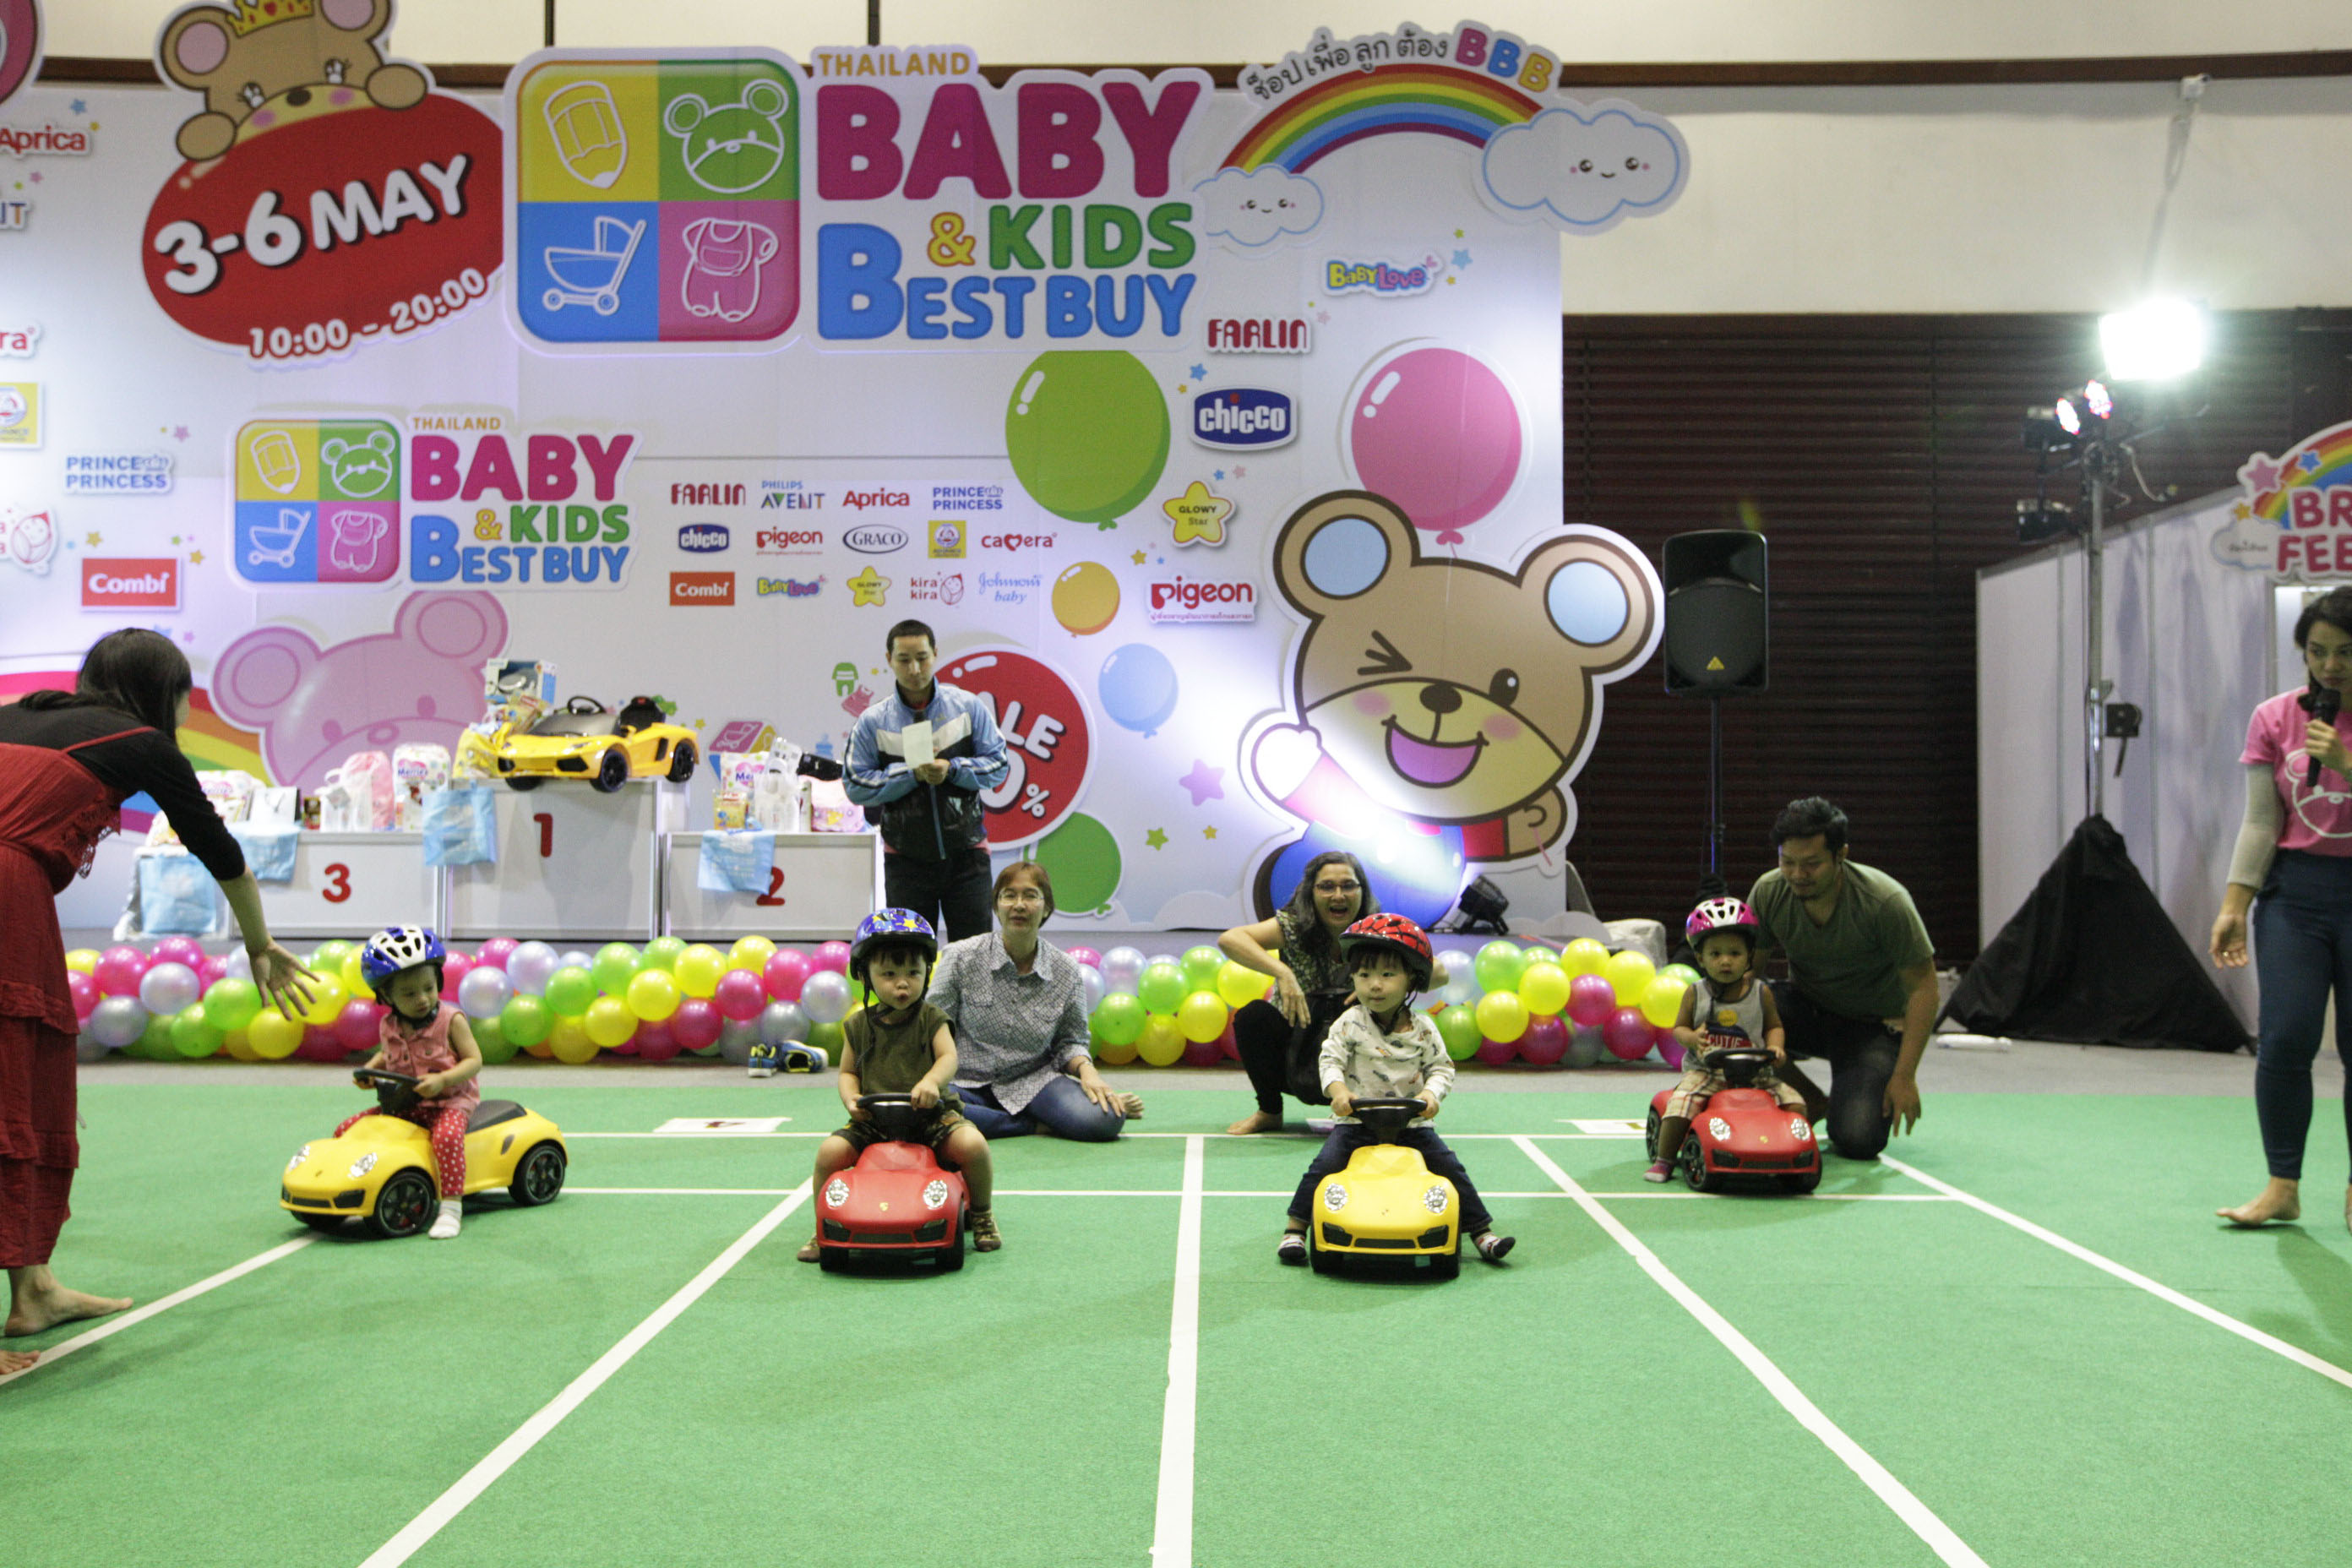 Thailand Baby & Kids Best Buy ครั้งที่ 30